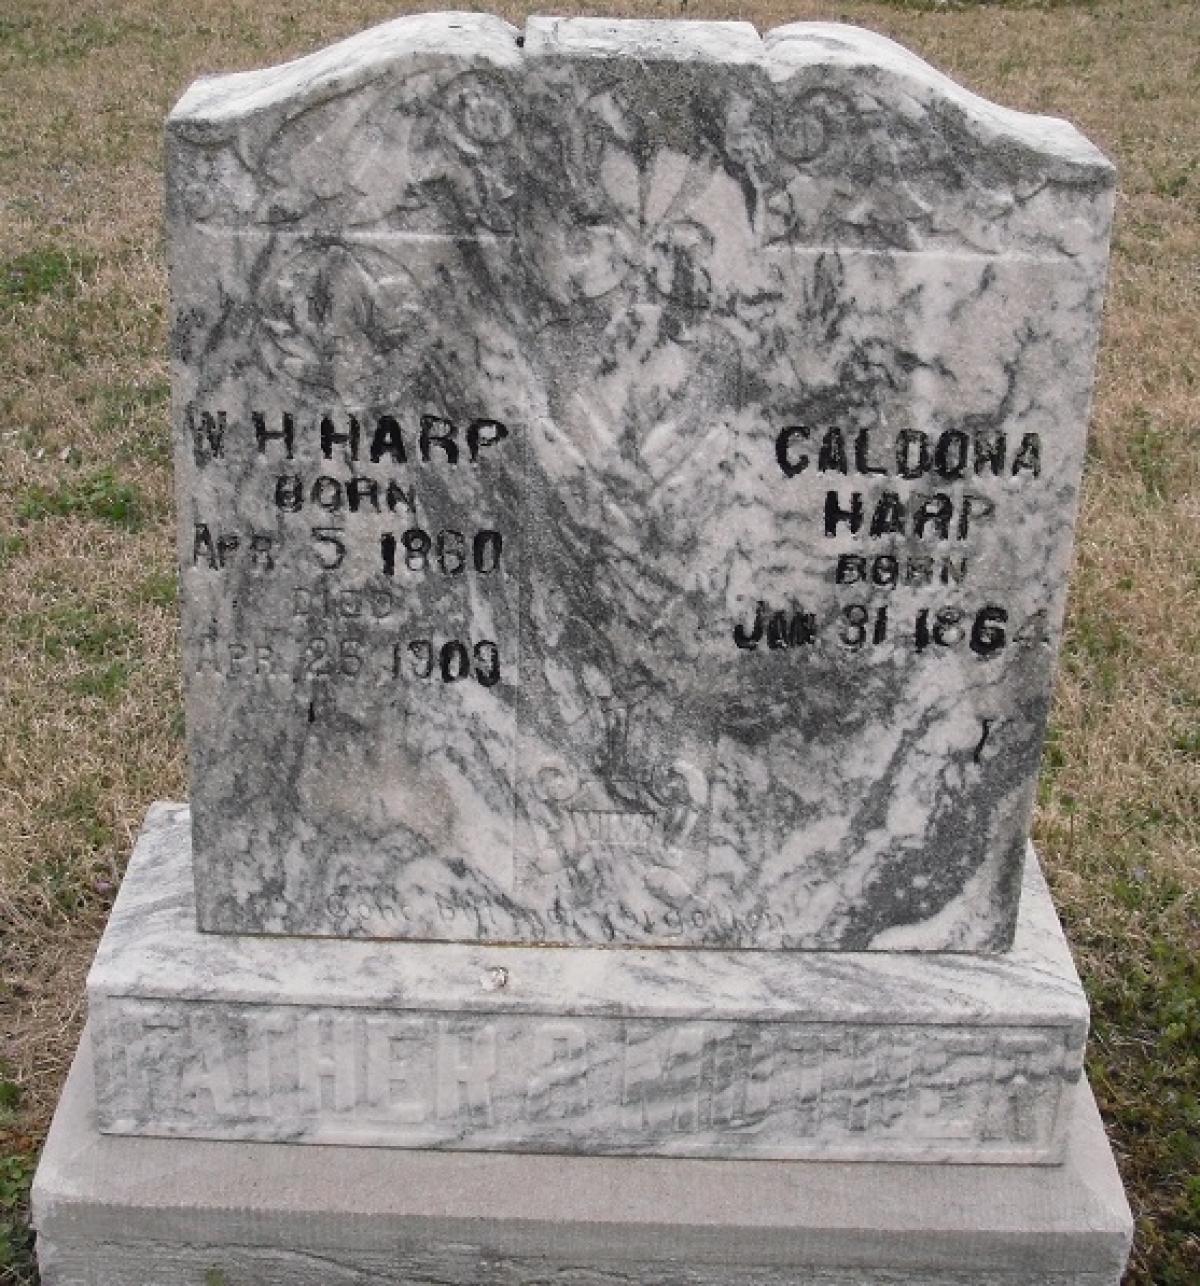 OK, Grove, Olympus Cemetery, Headstone, Harp, W. H. & Caldona